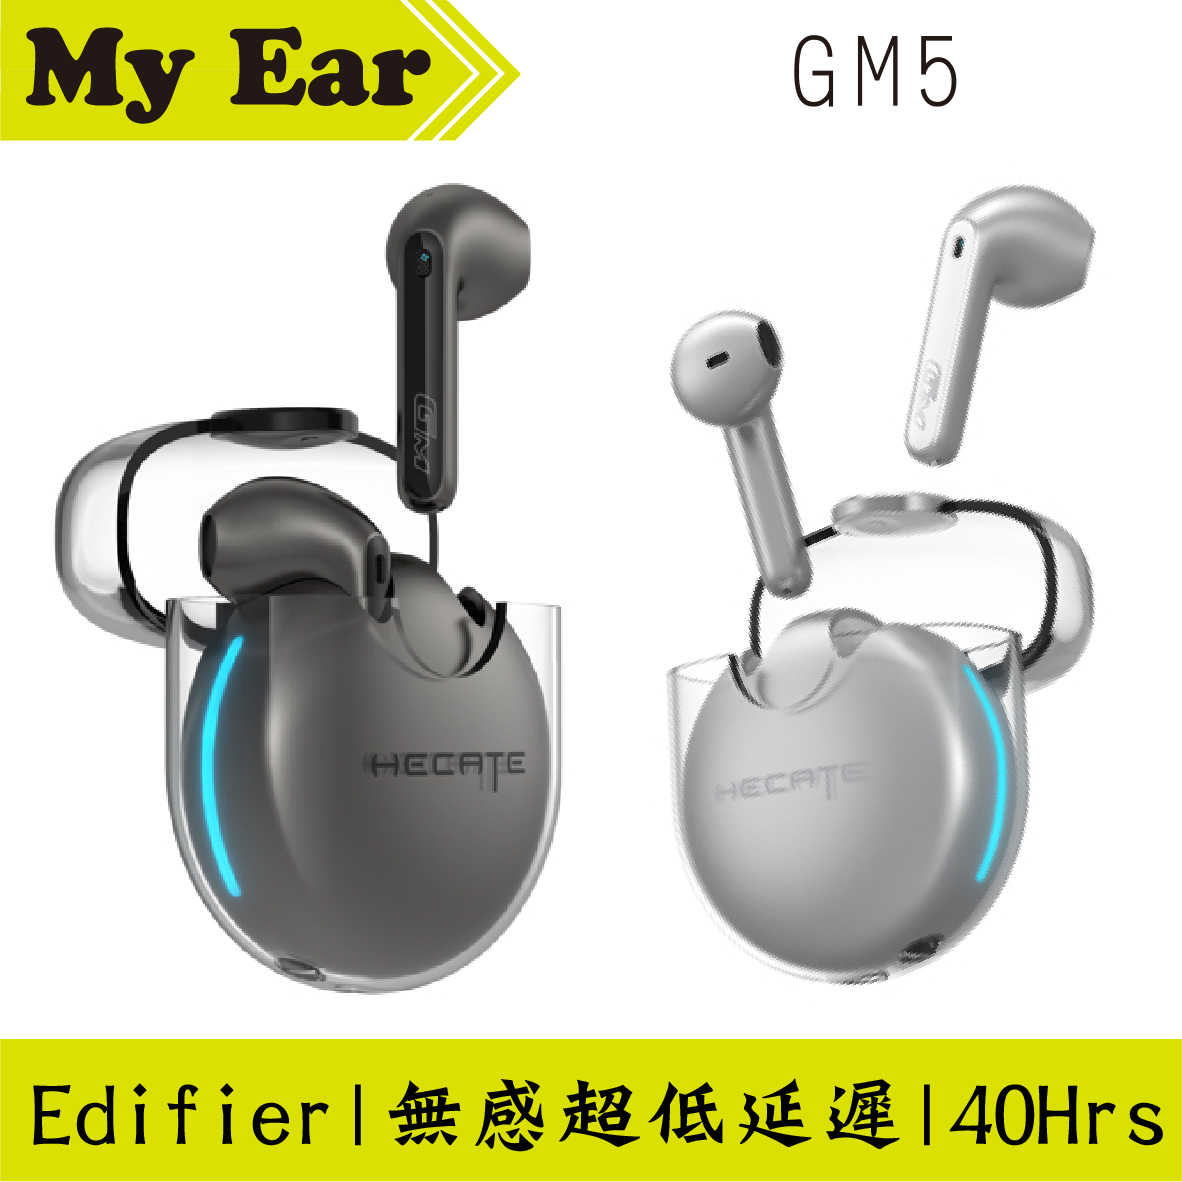 Edifier GM5 黑 超低延遲 電競 無線藍芽耳機 | My Ear 耳機專門店